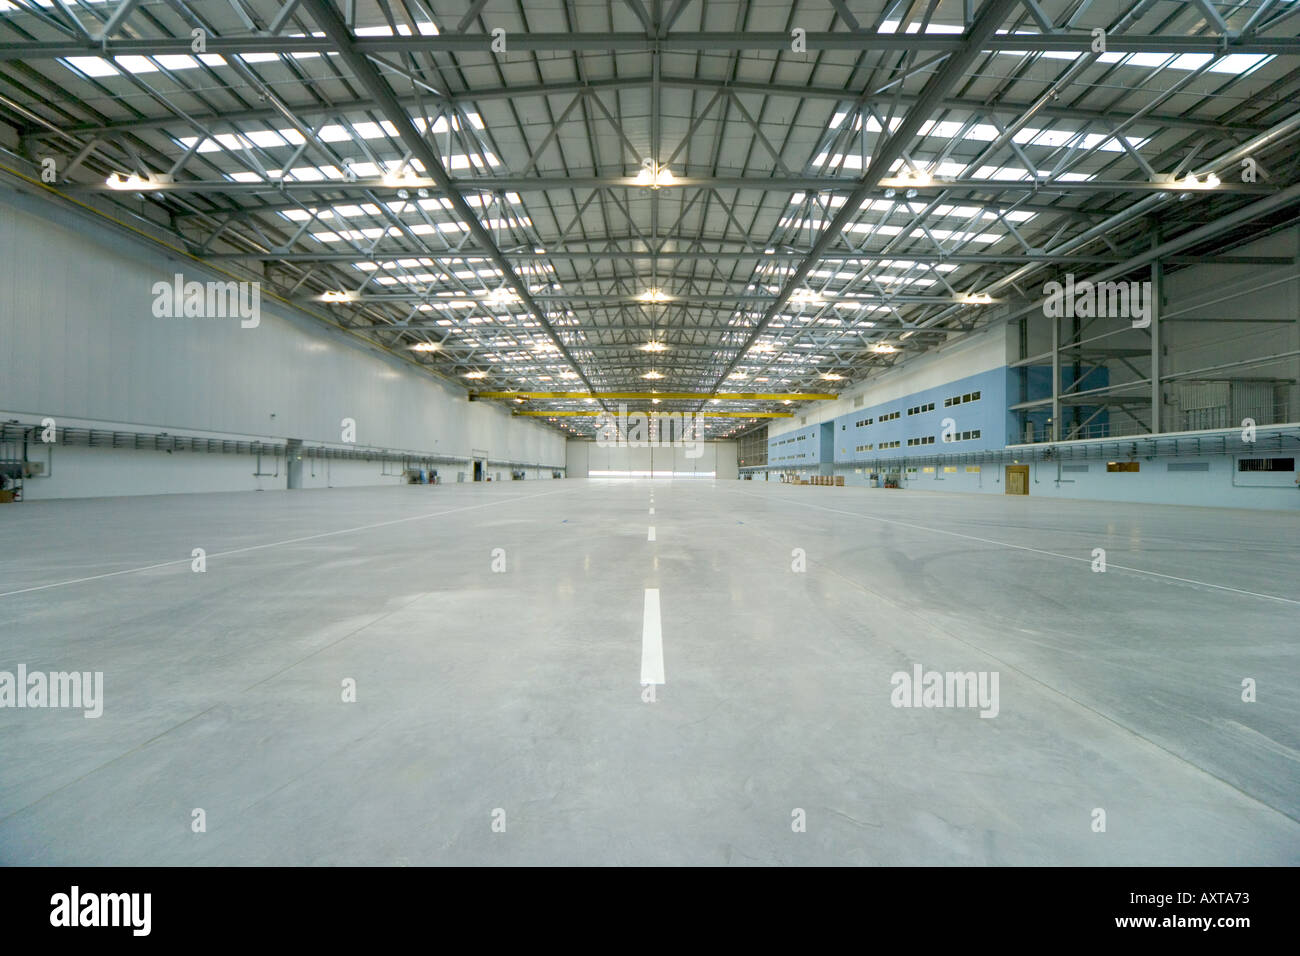 Large empty aircraft hangar workshop floor Stock Photo